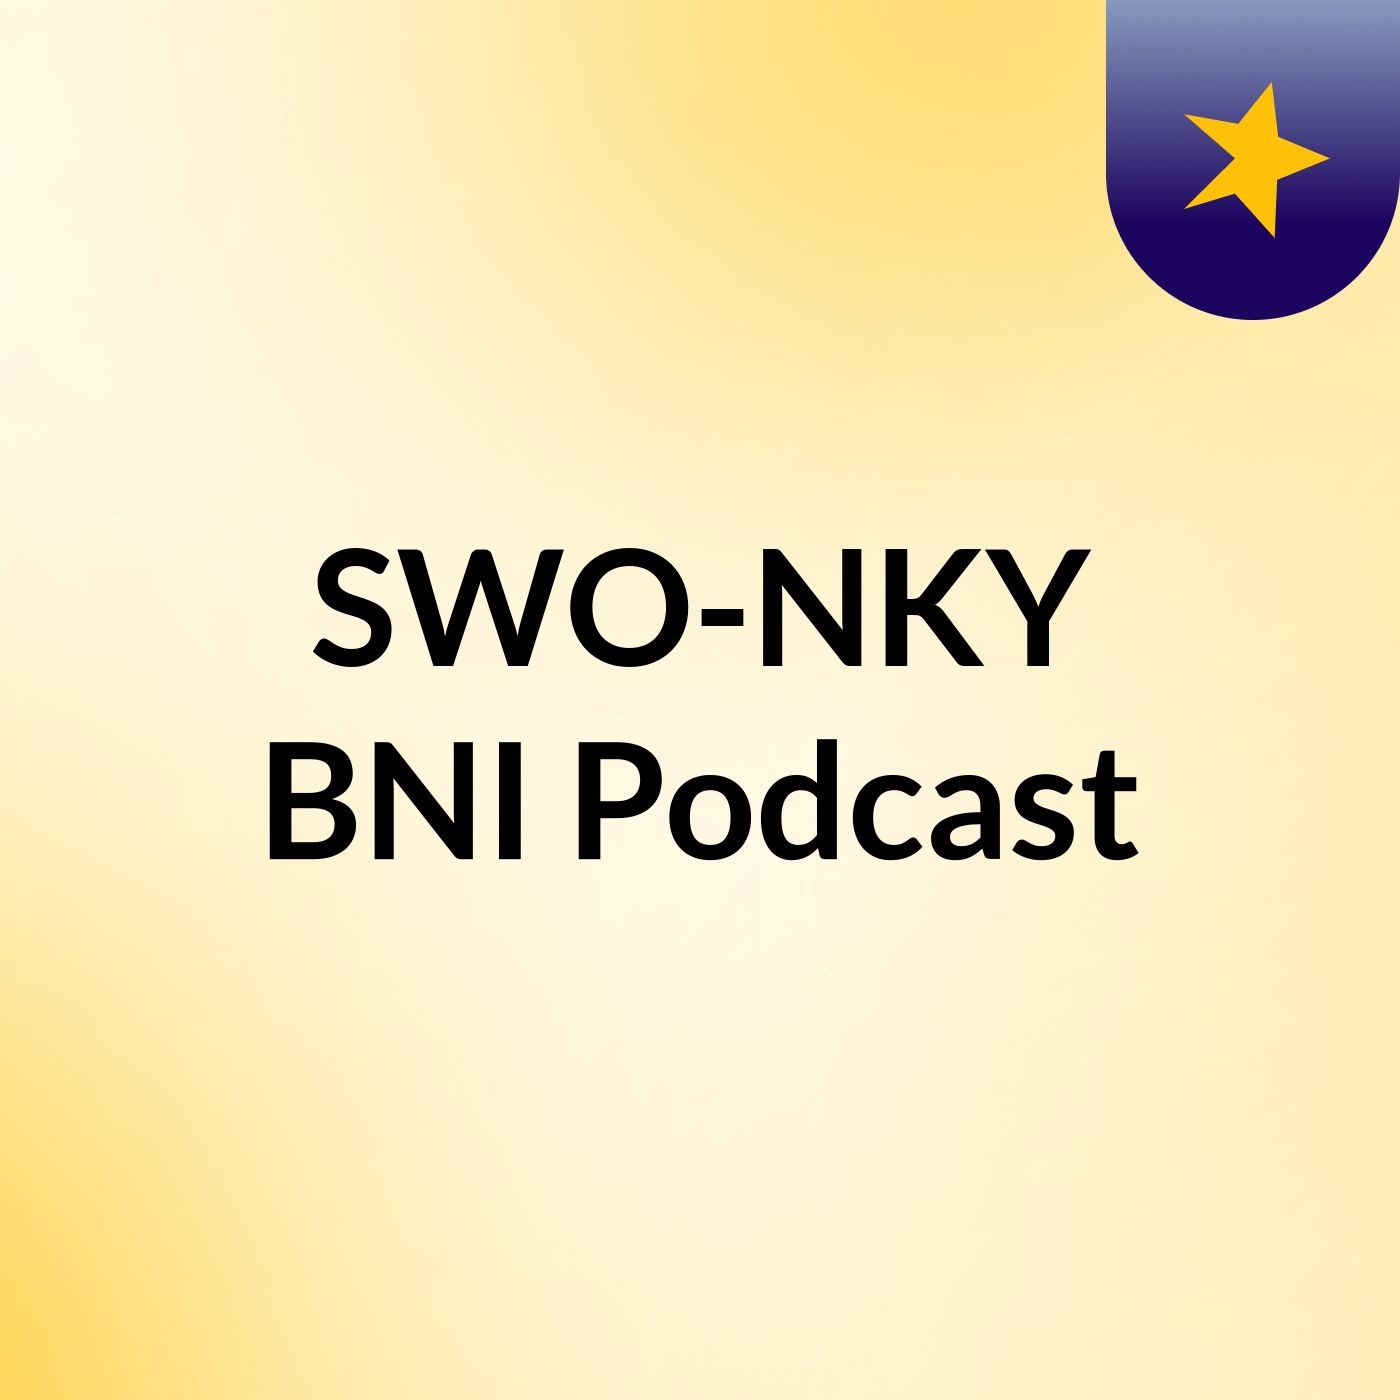 SWO-NKY BNI Podcast